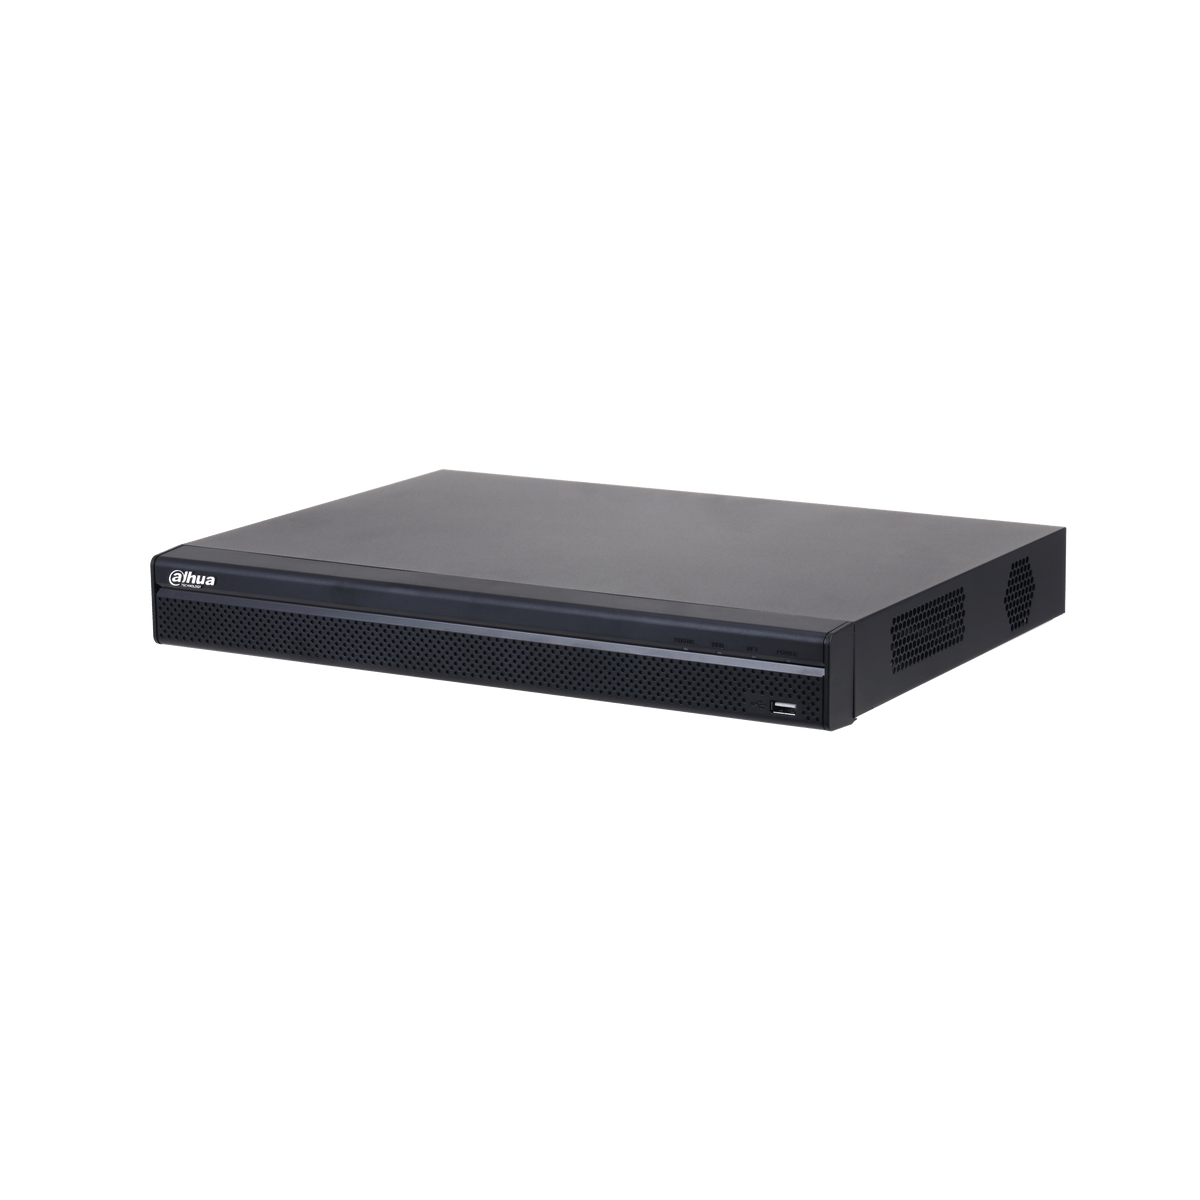 DAHUA NVR4216-4KS2/L 16 Channel 1U 2HDDs Network Video Recorder